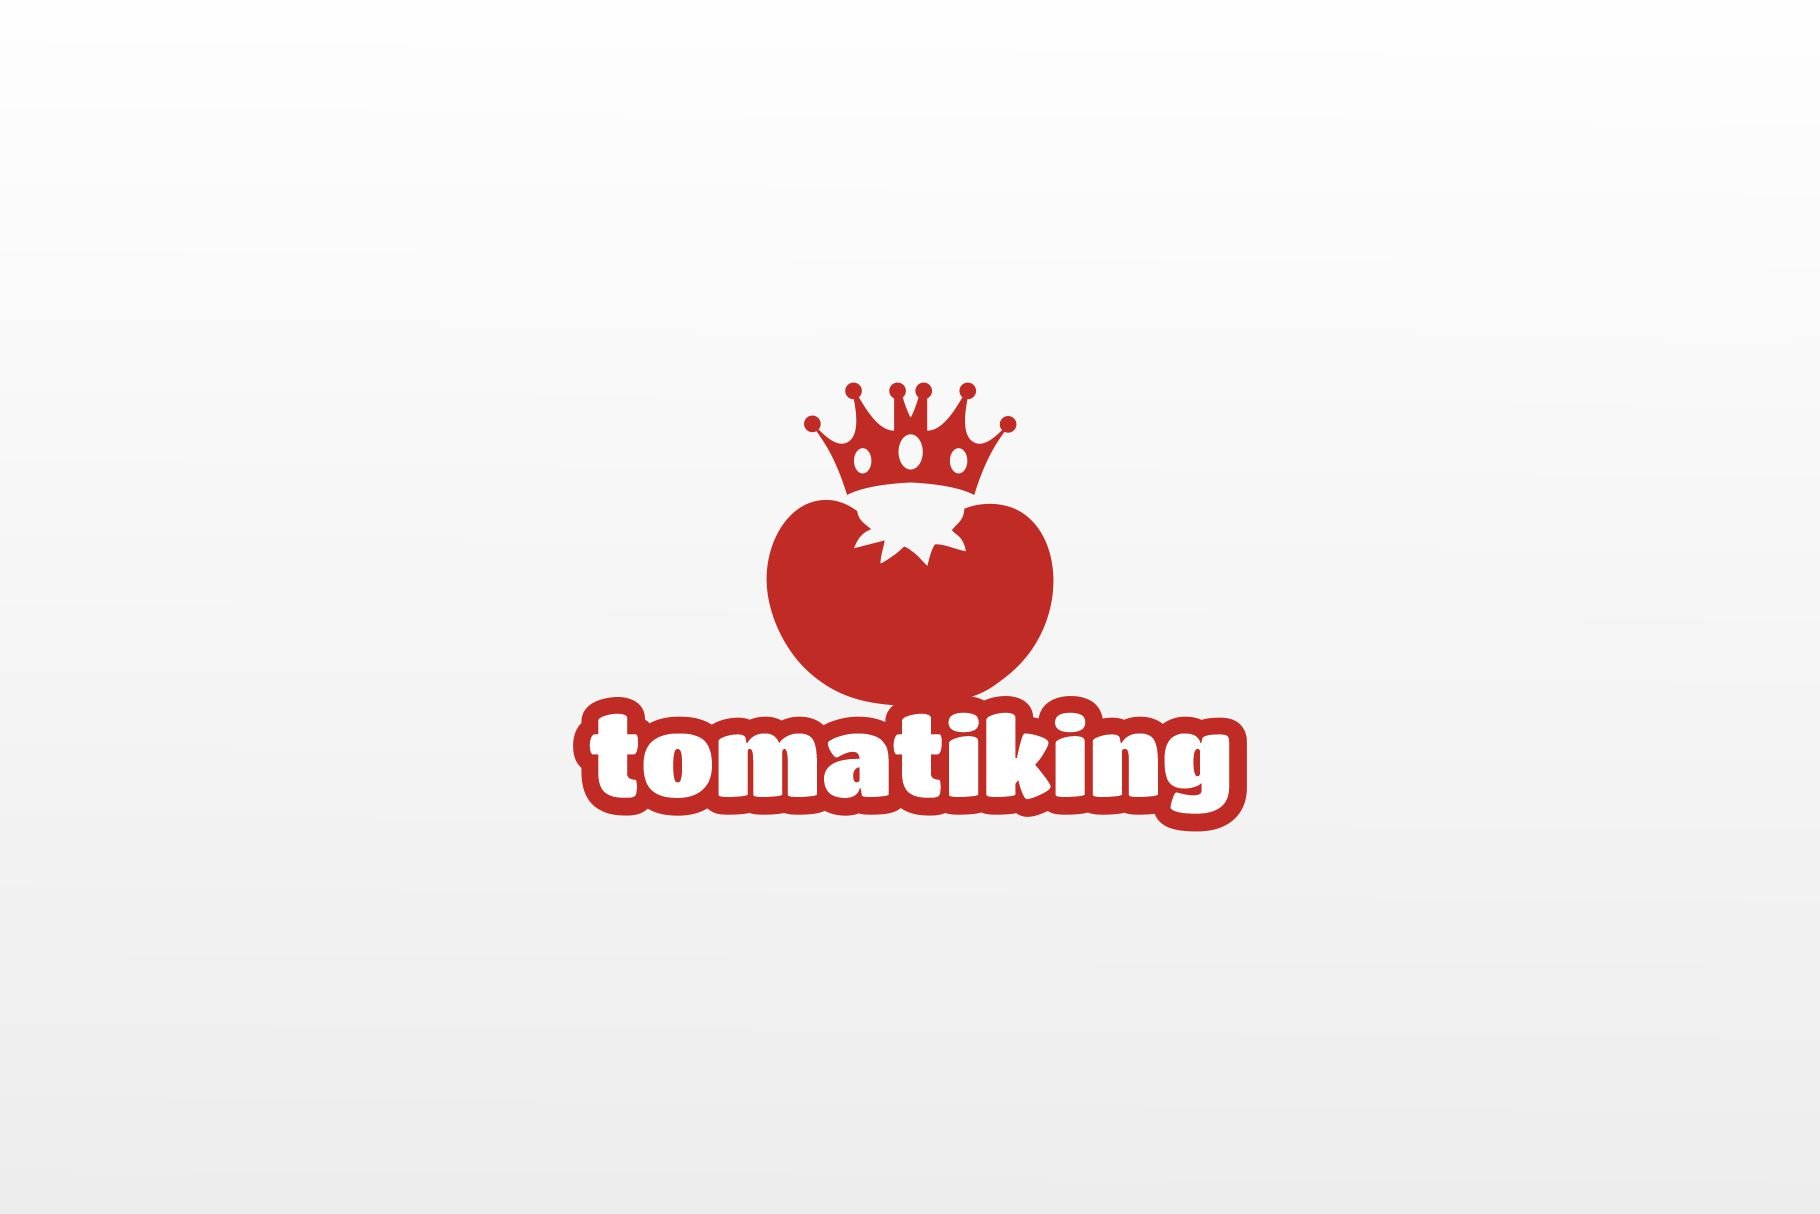 King tomato logo design template preview image.